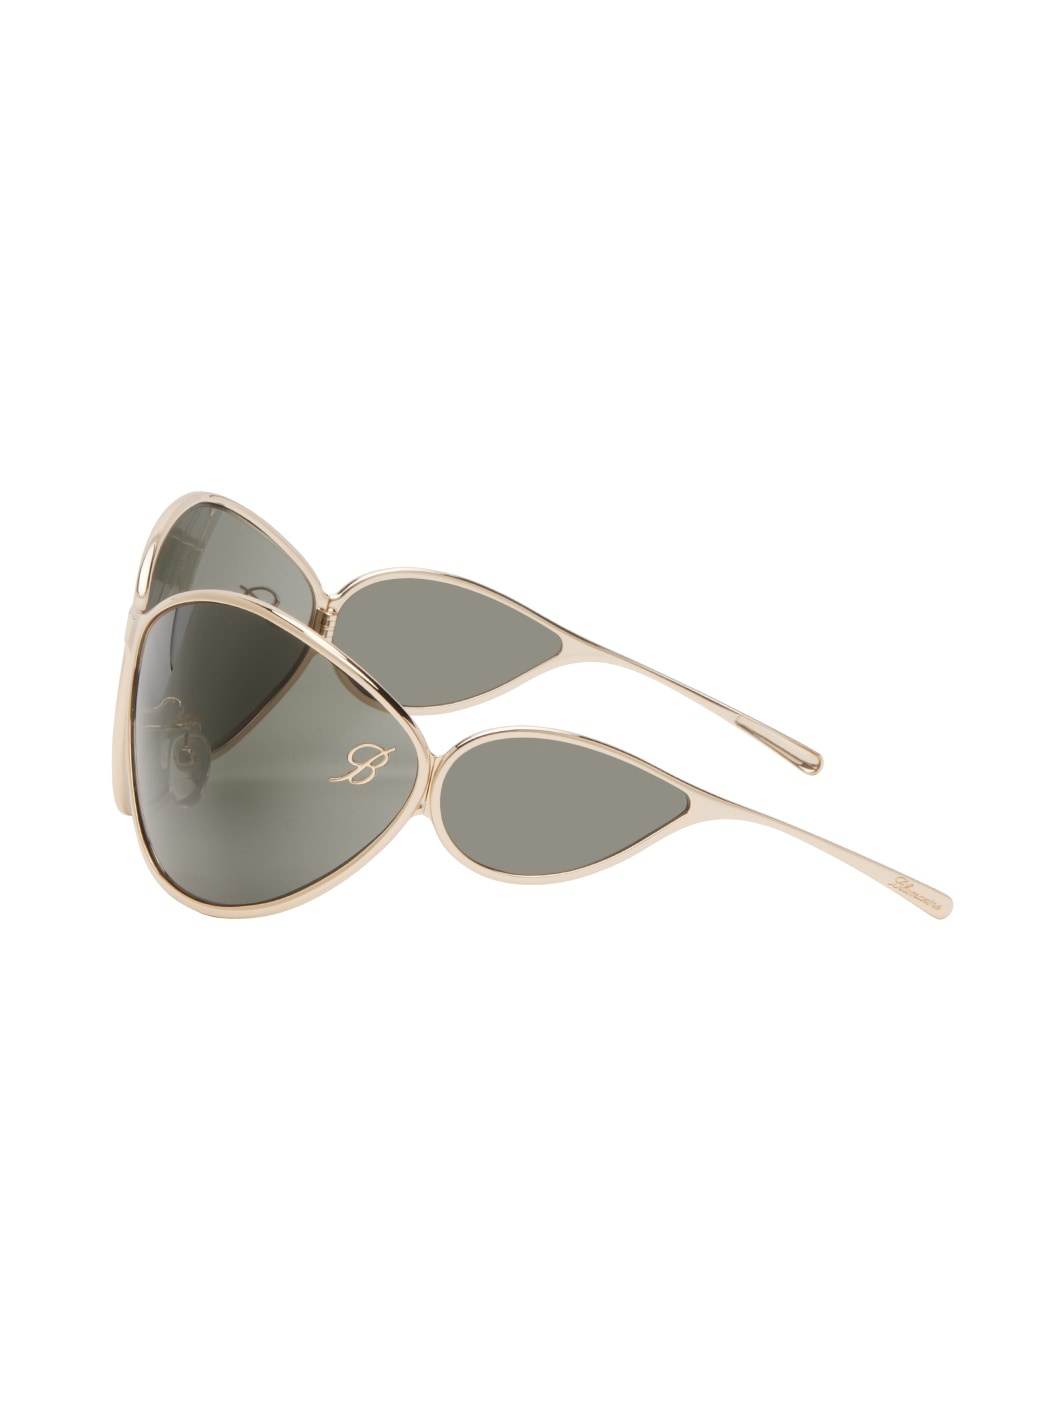 Gold Wraparound Sunglasses - 3